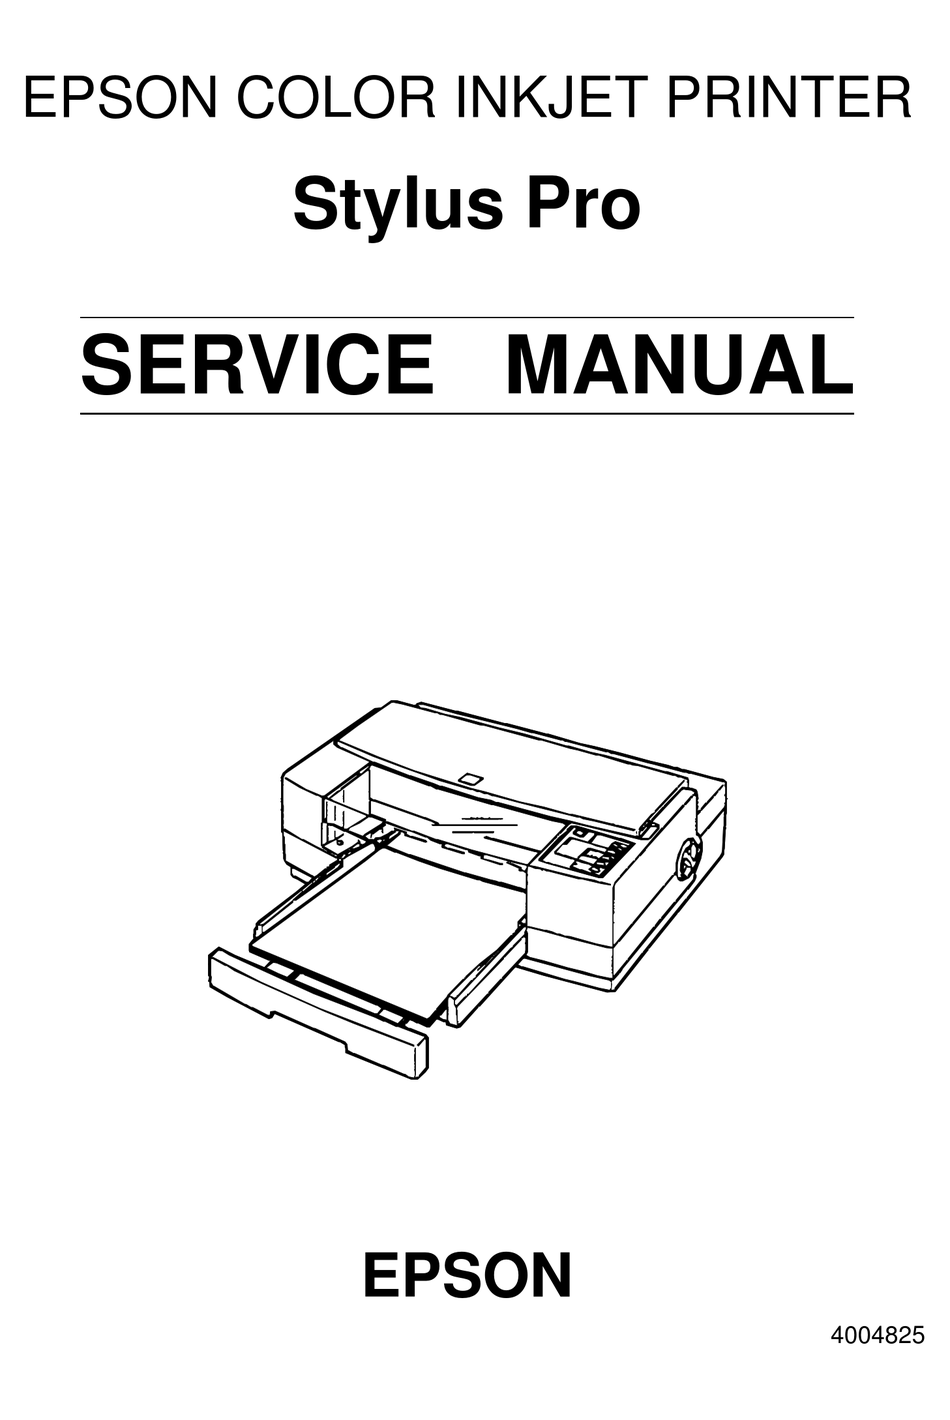 Epson Stylus Pro Service Manual Pdf Download Manualslib 3748